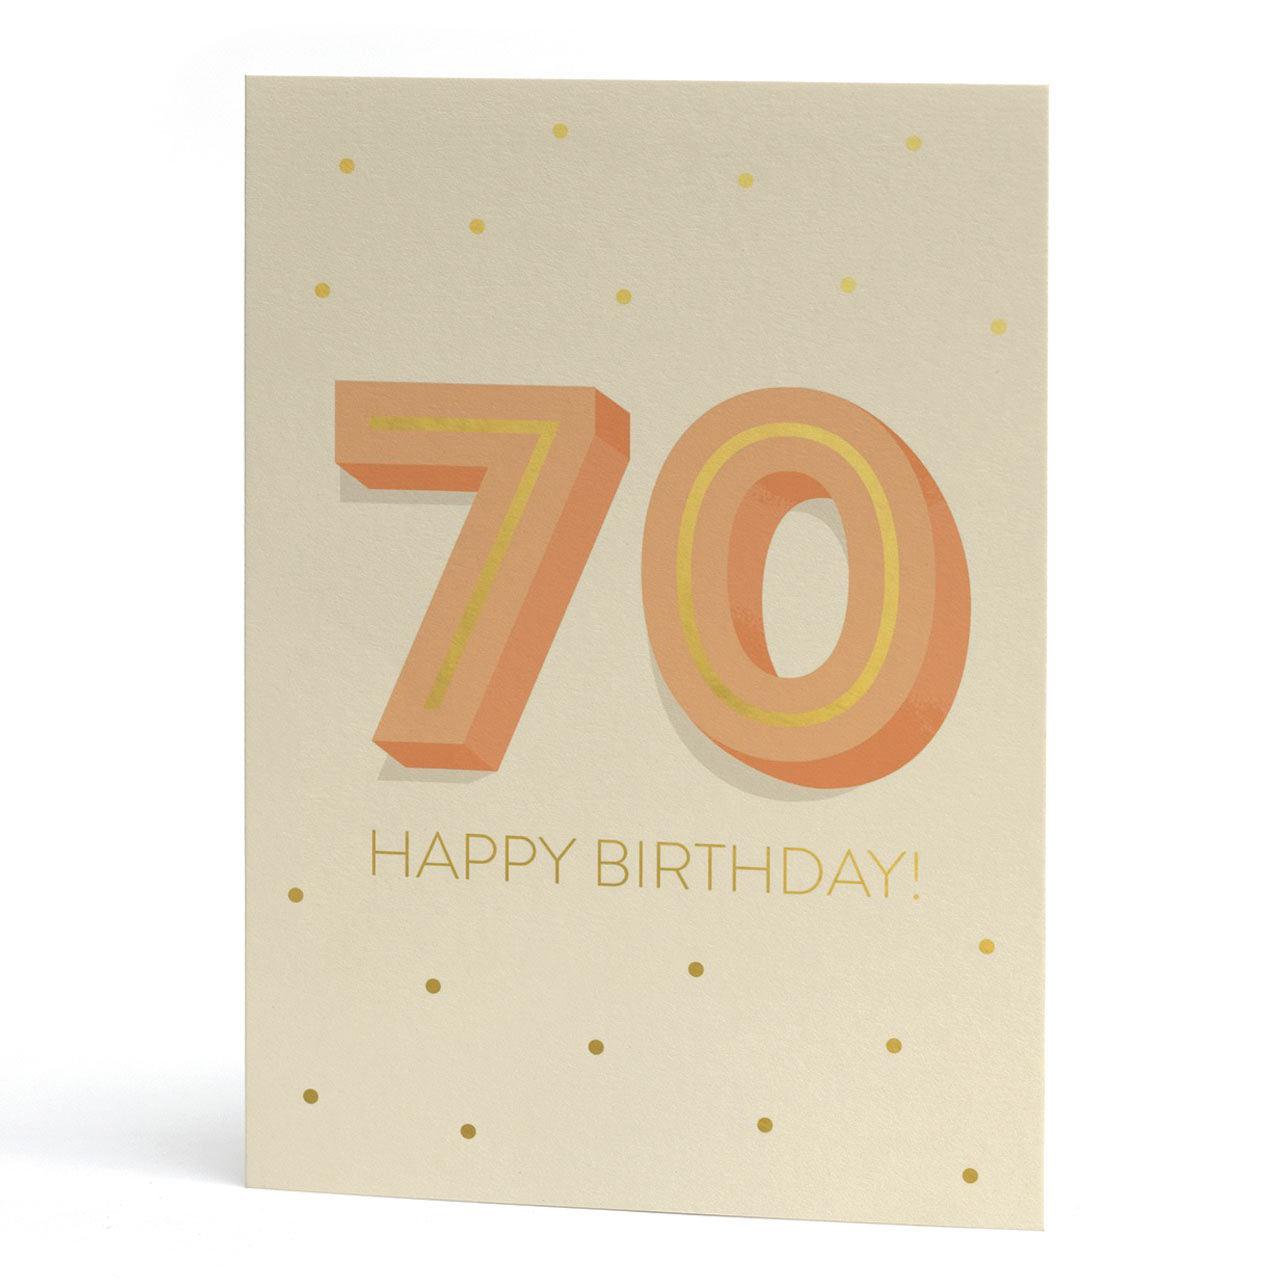 Big 70th Birthday Gold Foil Greeting Card